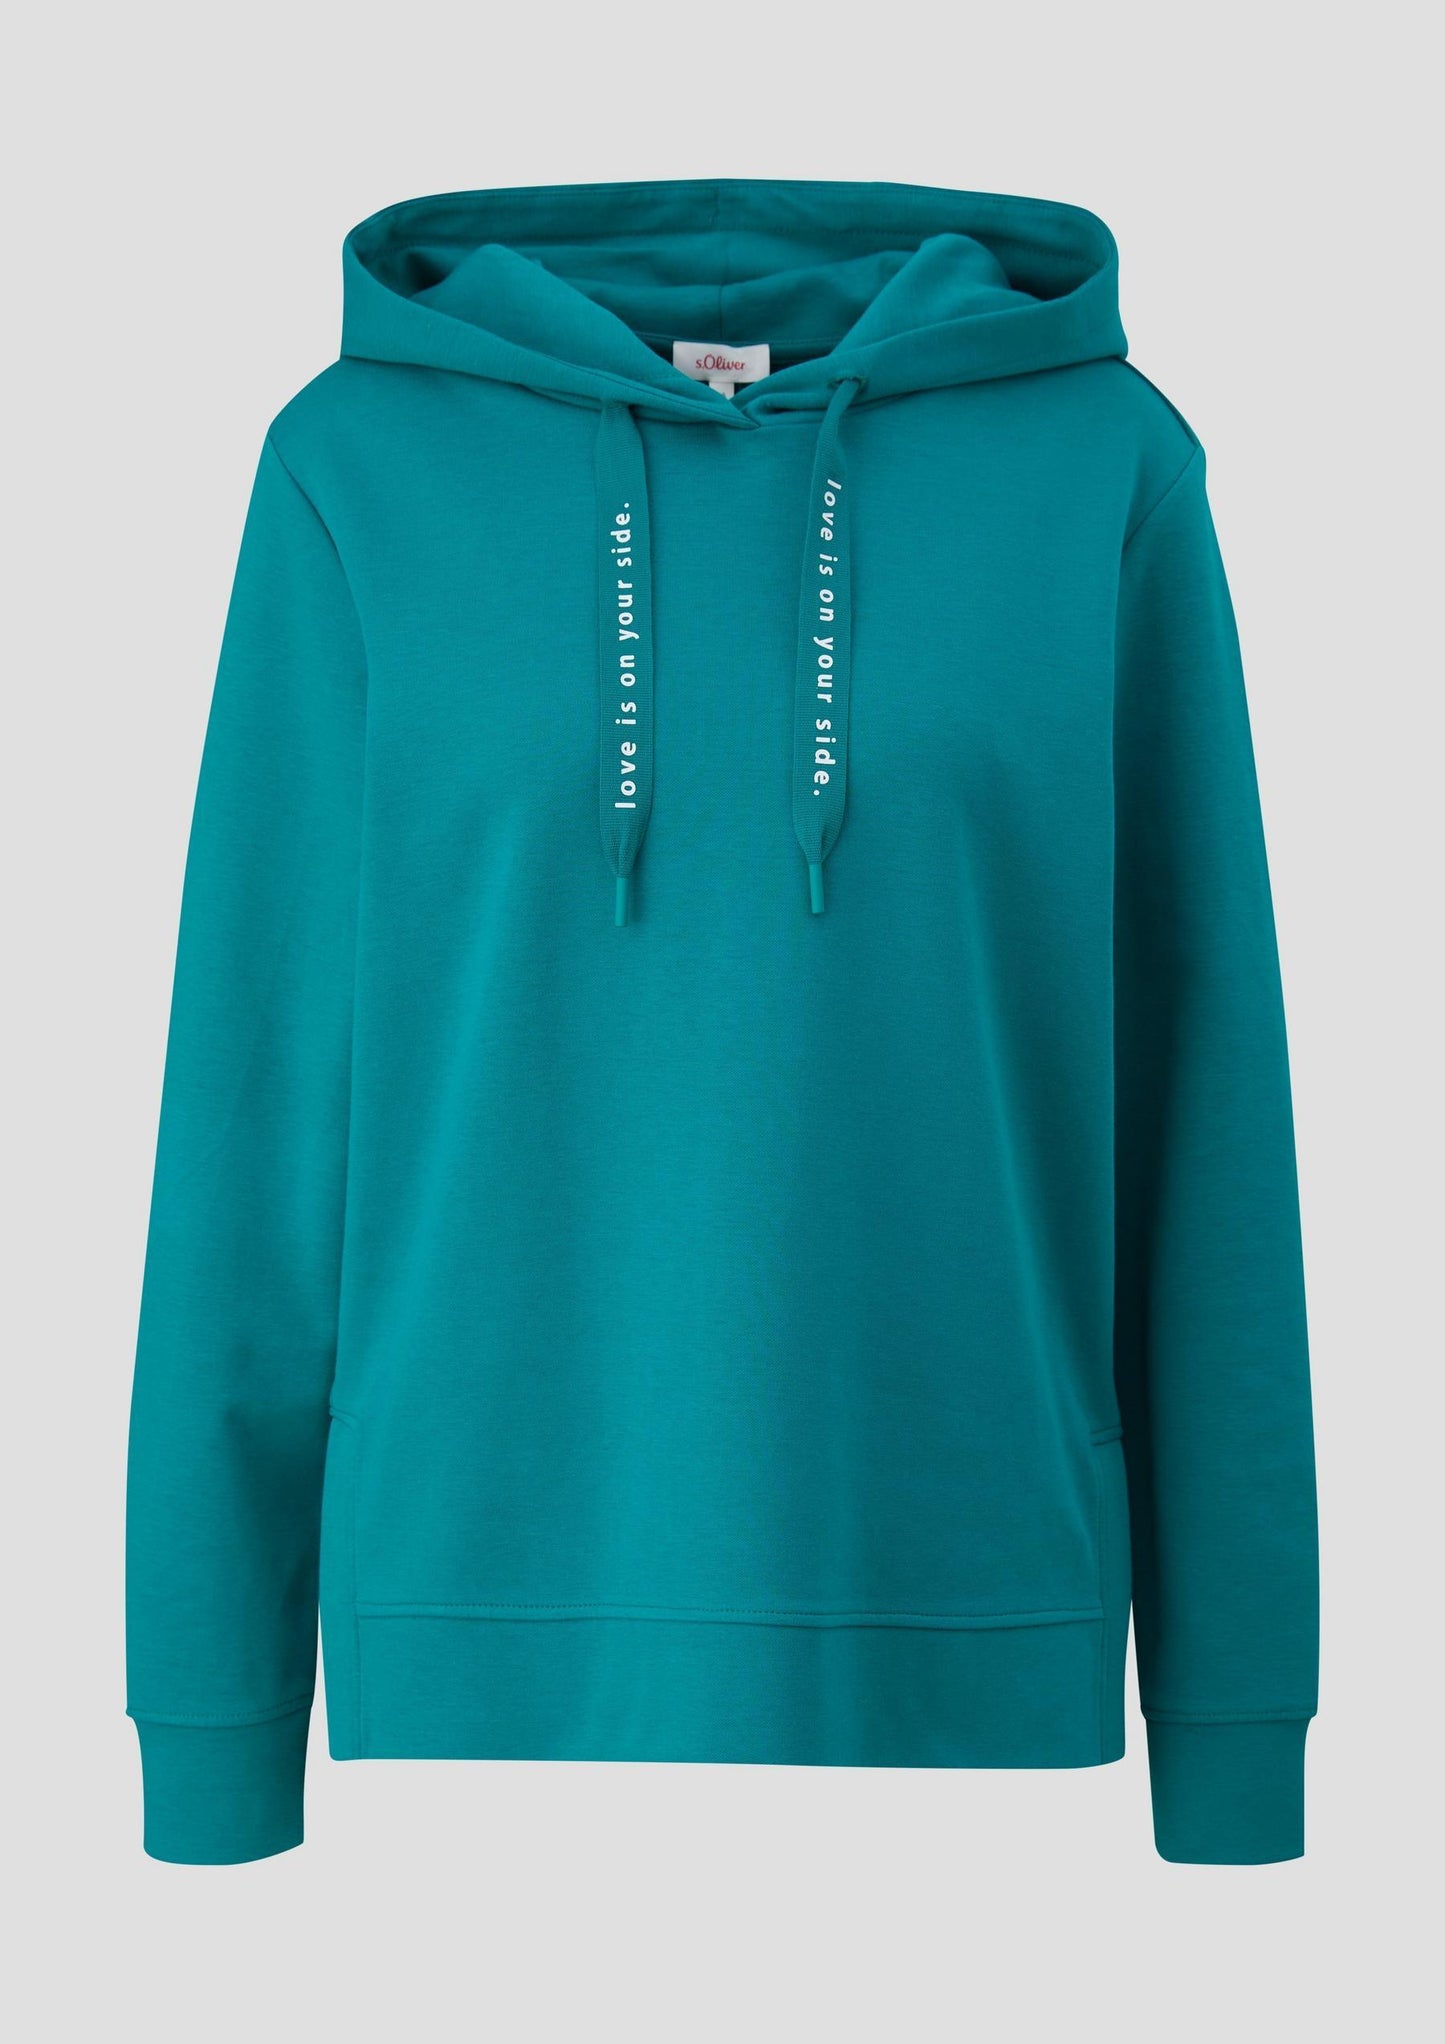 s.Oliver - Weiches Sweatshirt mit Kapuze - Farbe: petrol